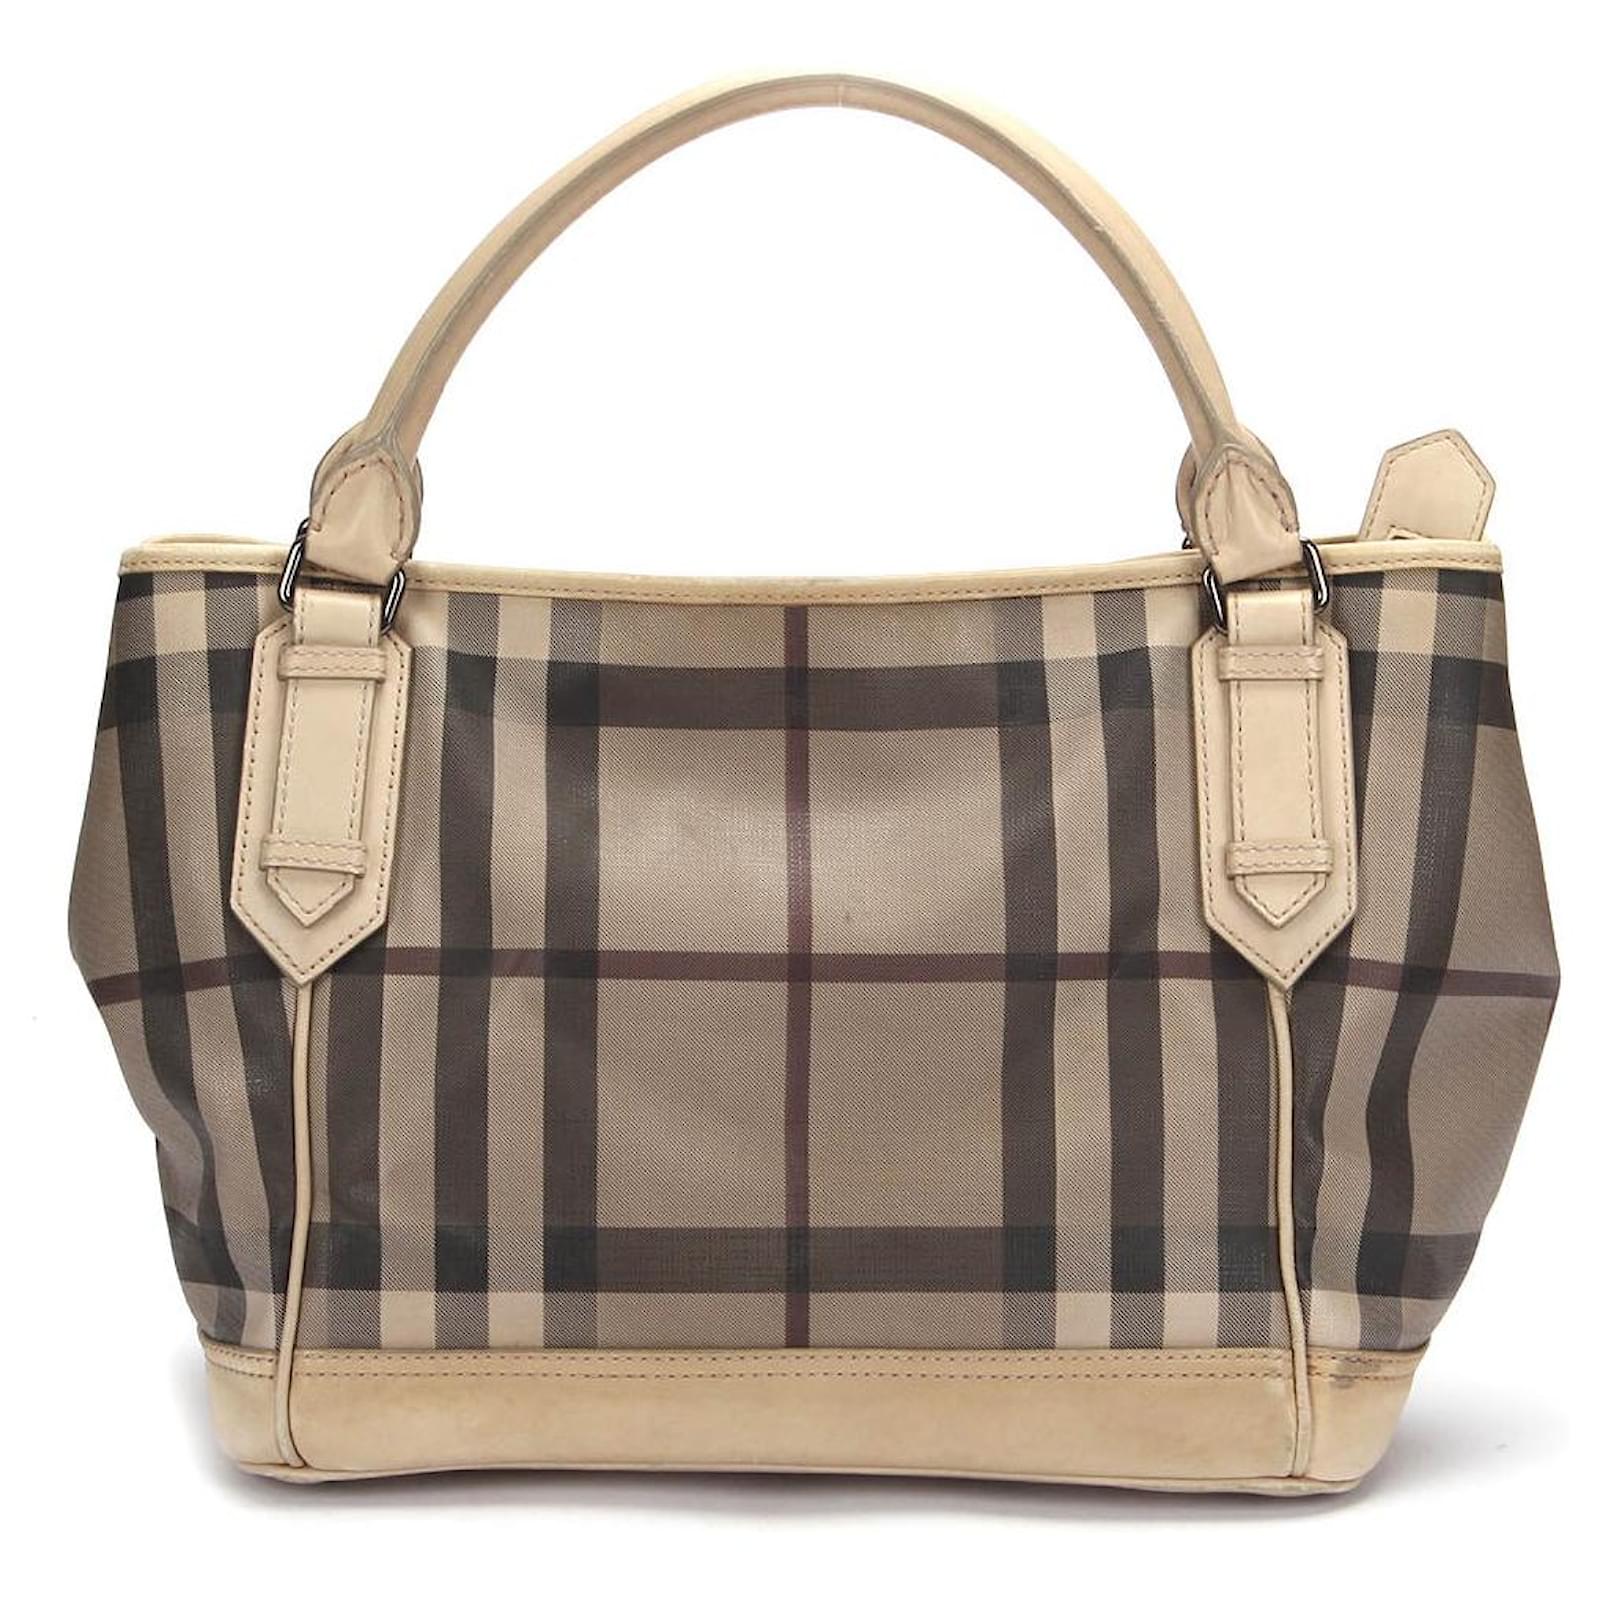 Burberry Satchel Handbags for Women, Authenticity Guaranteed